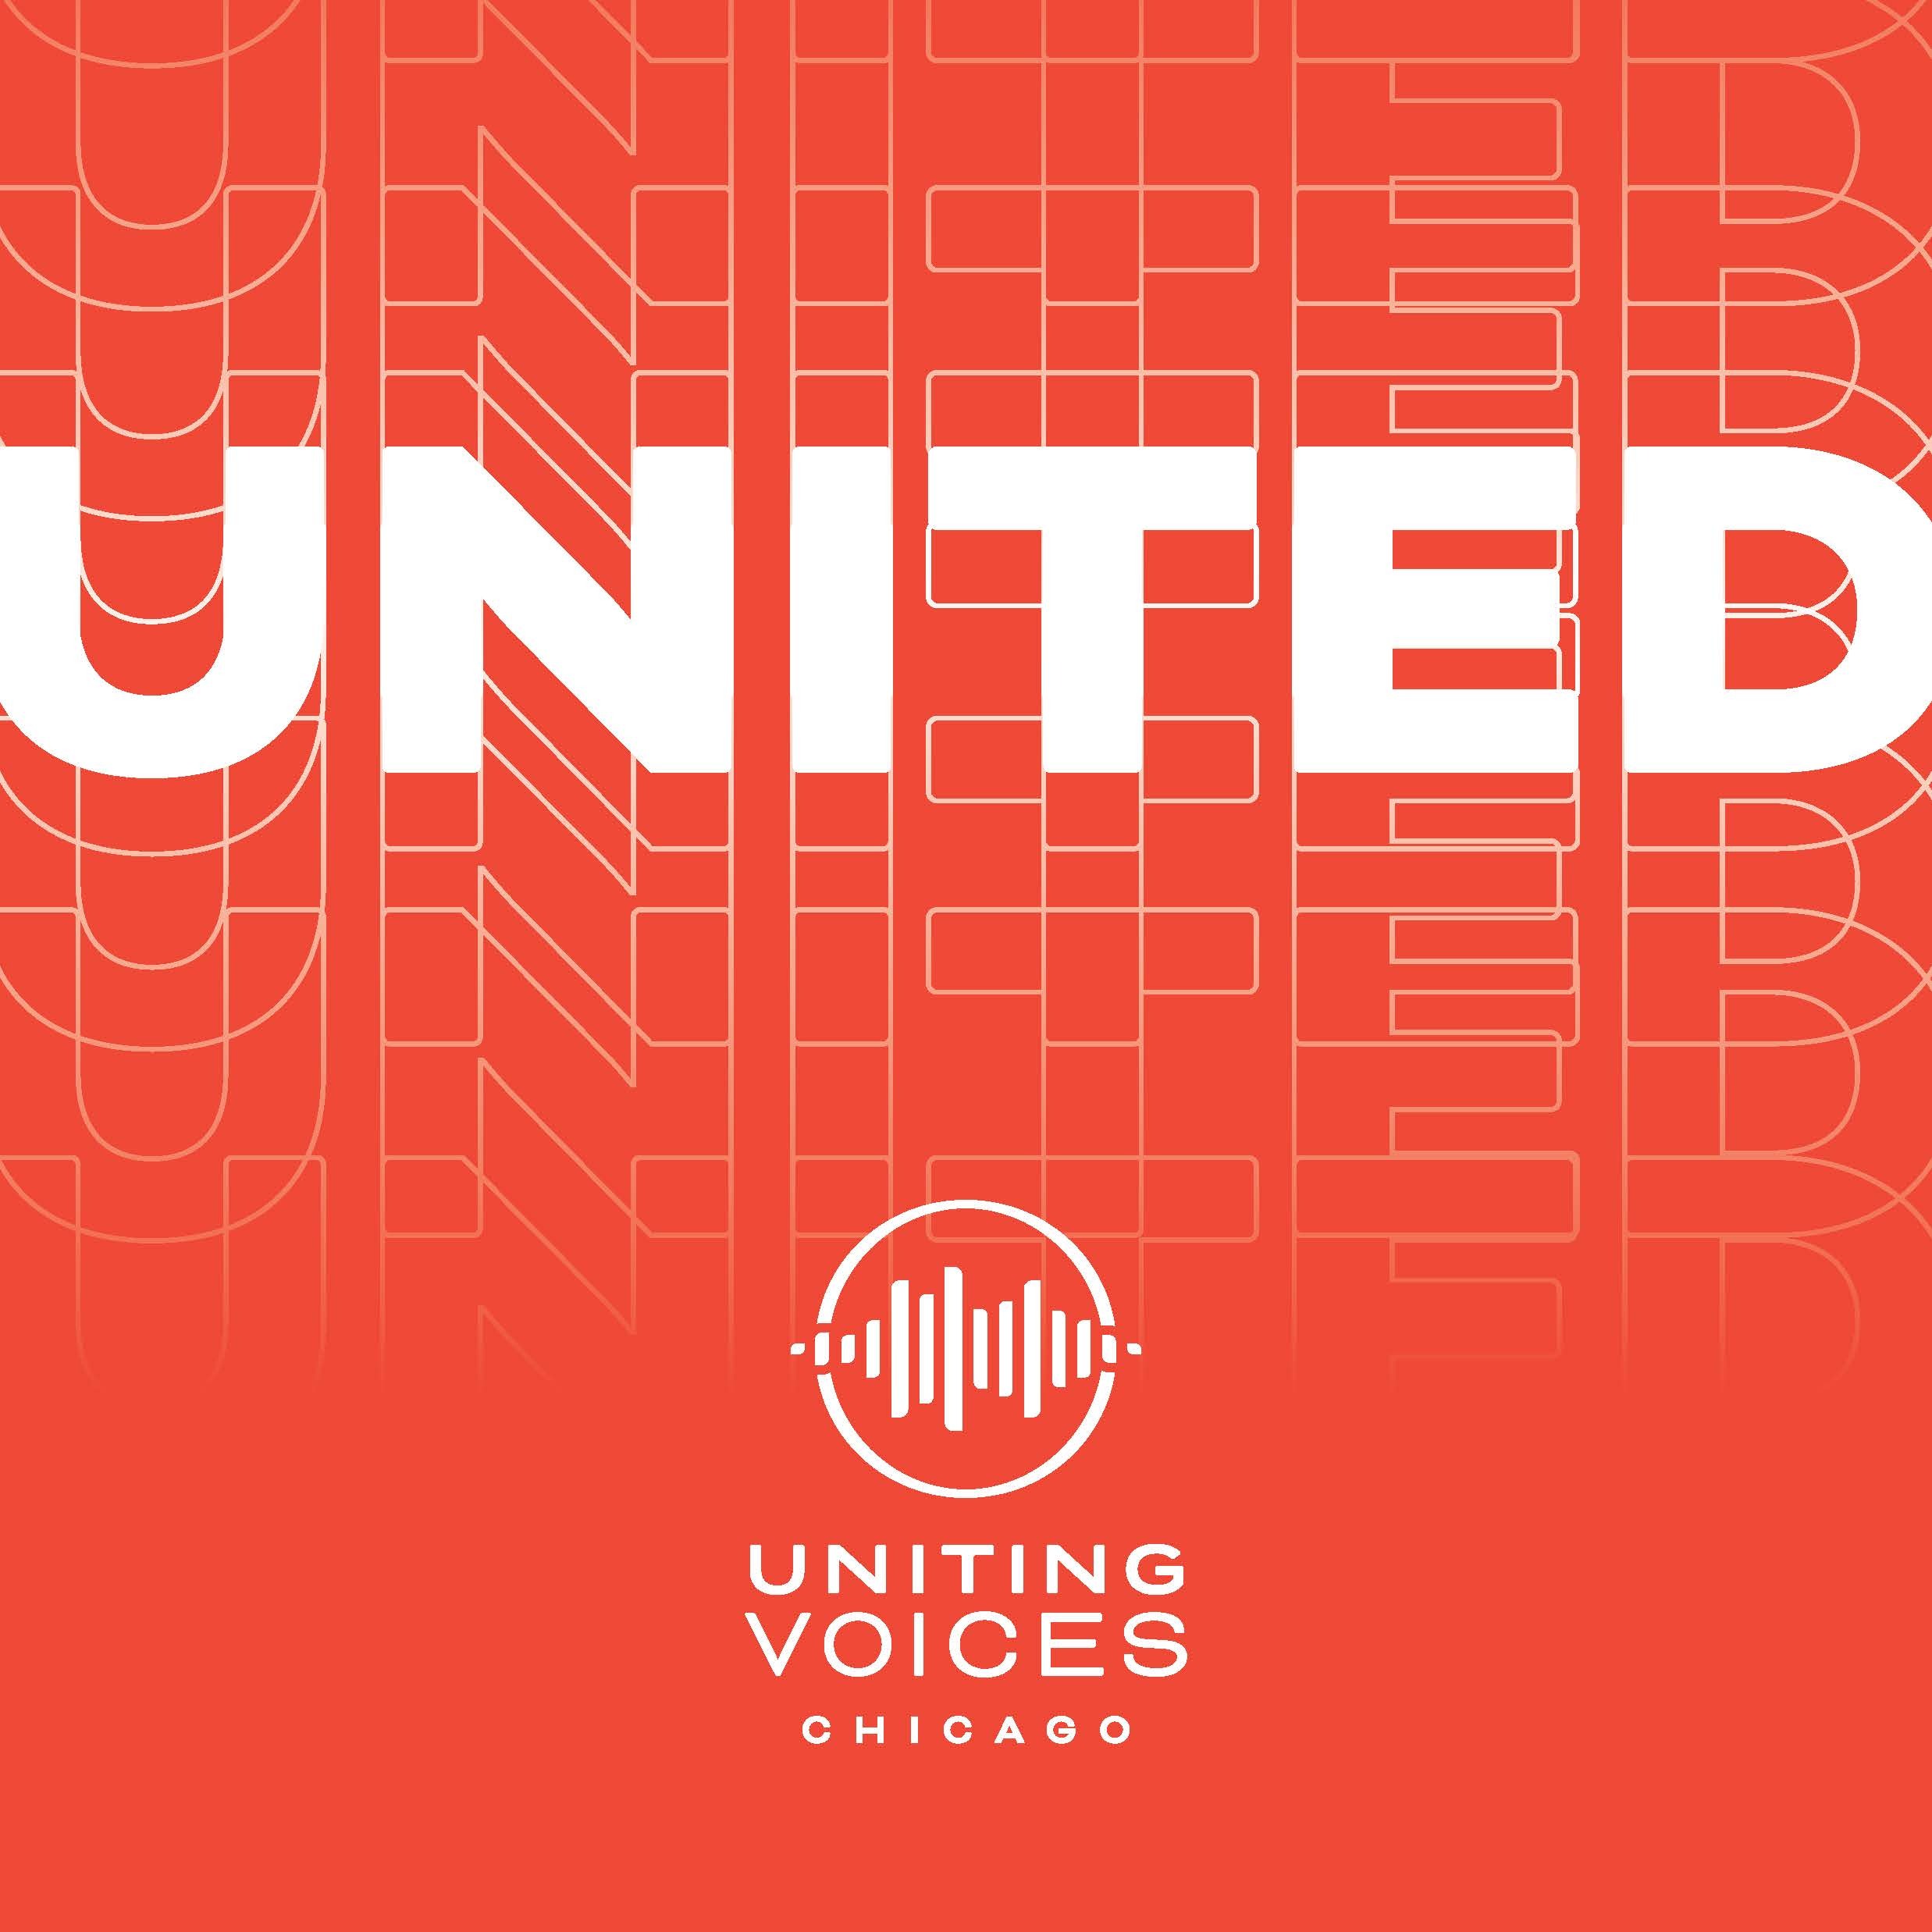 United Single album art v2b